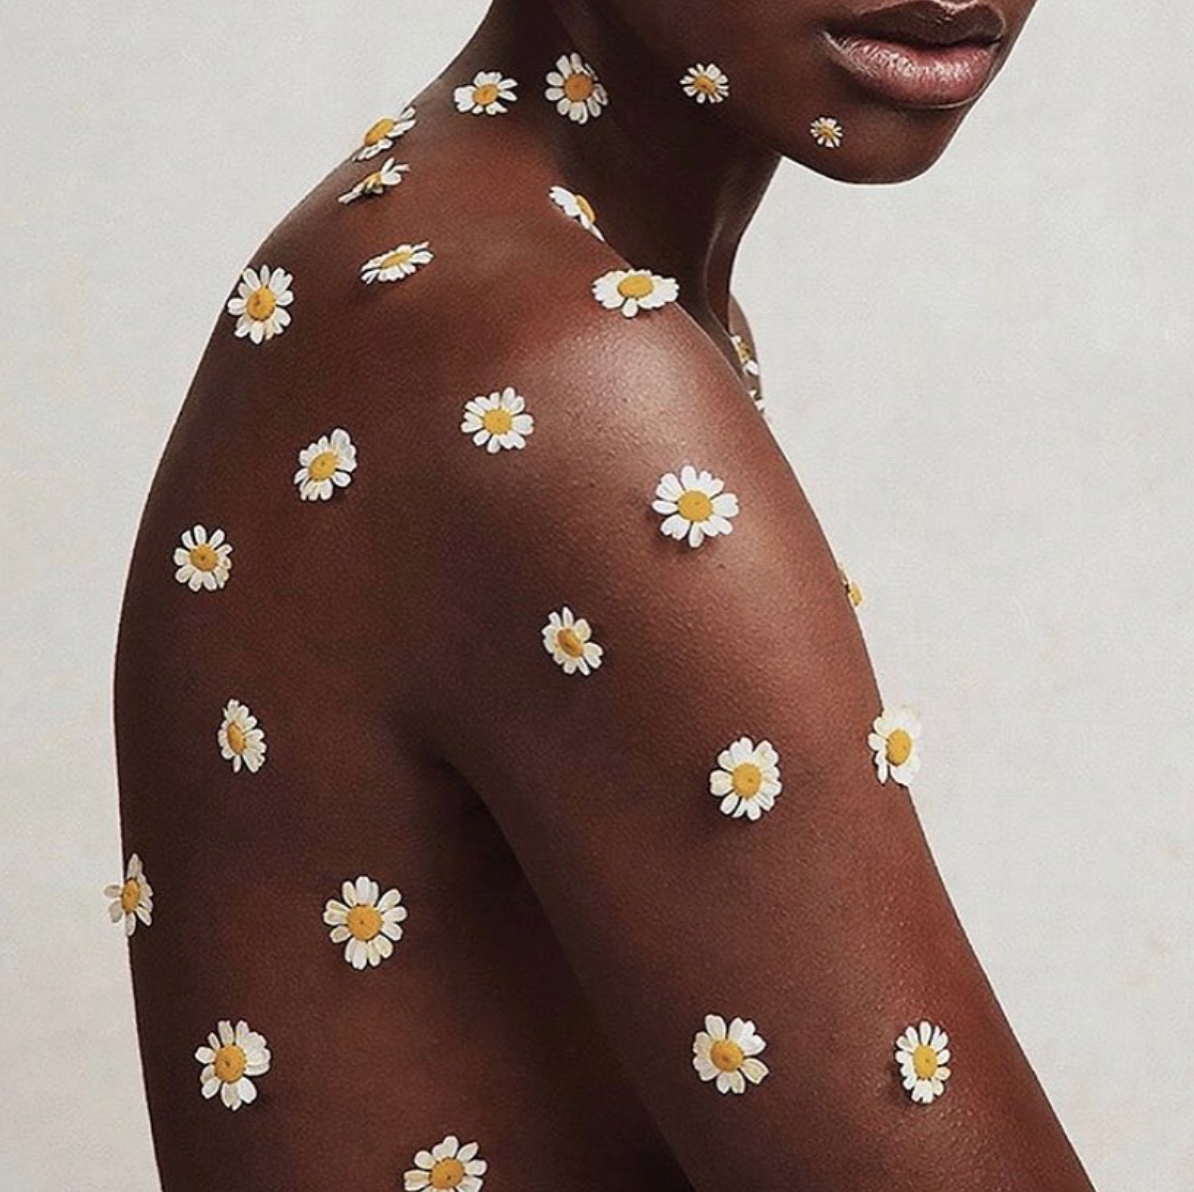 daisies @wearproclaim